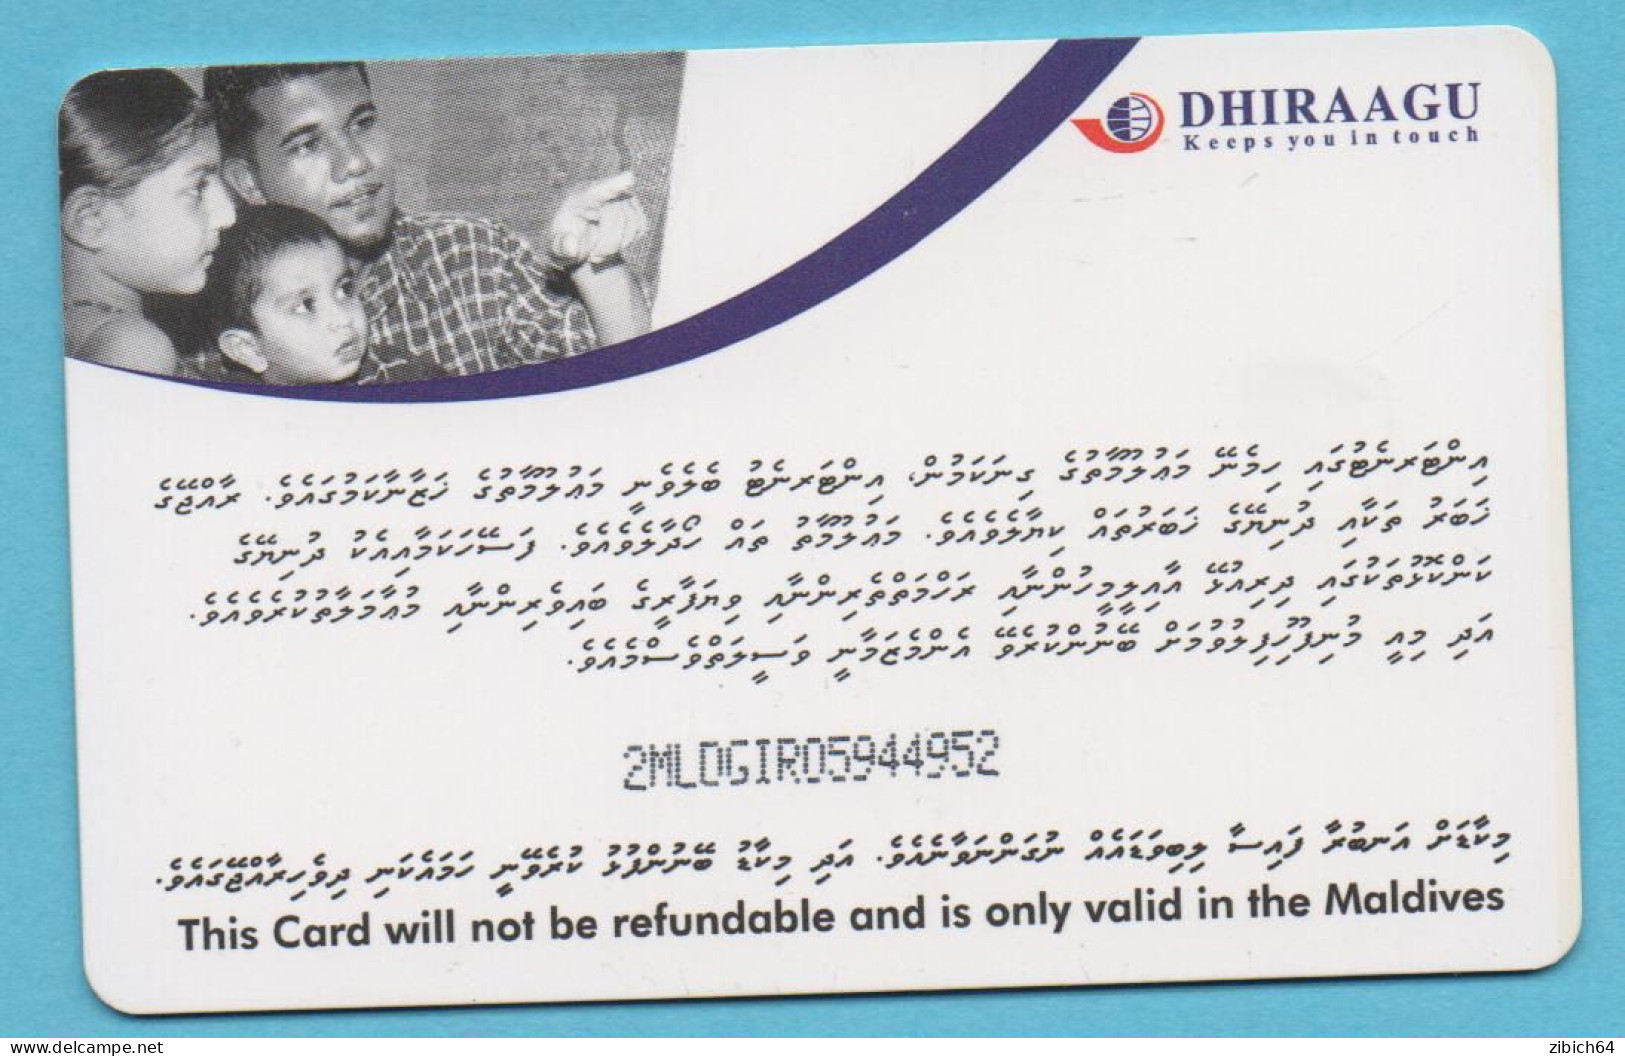 MALDIVES Chip Phonecard - Maldivas